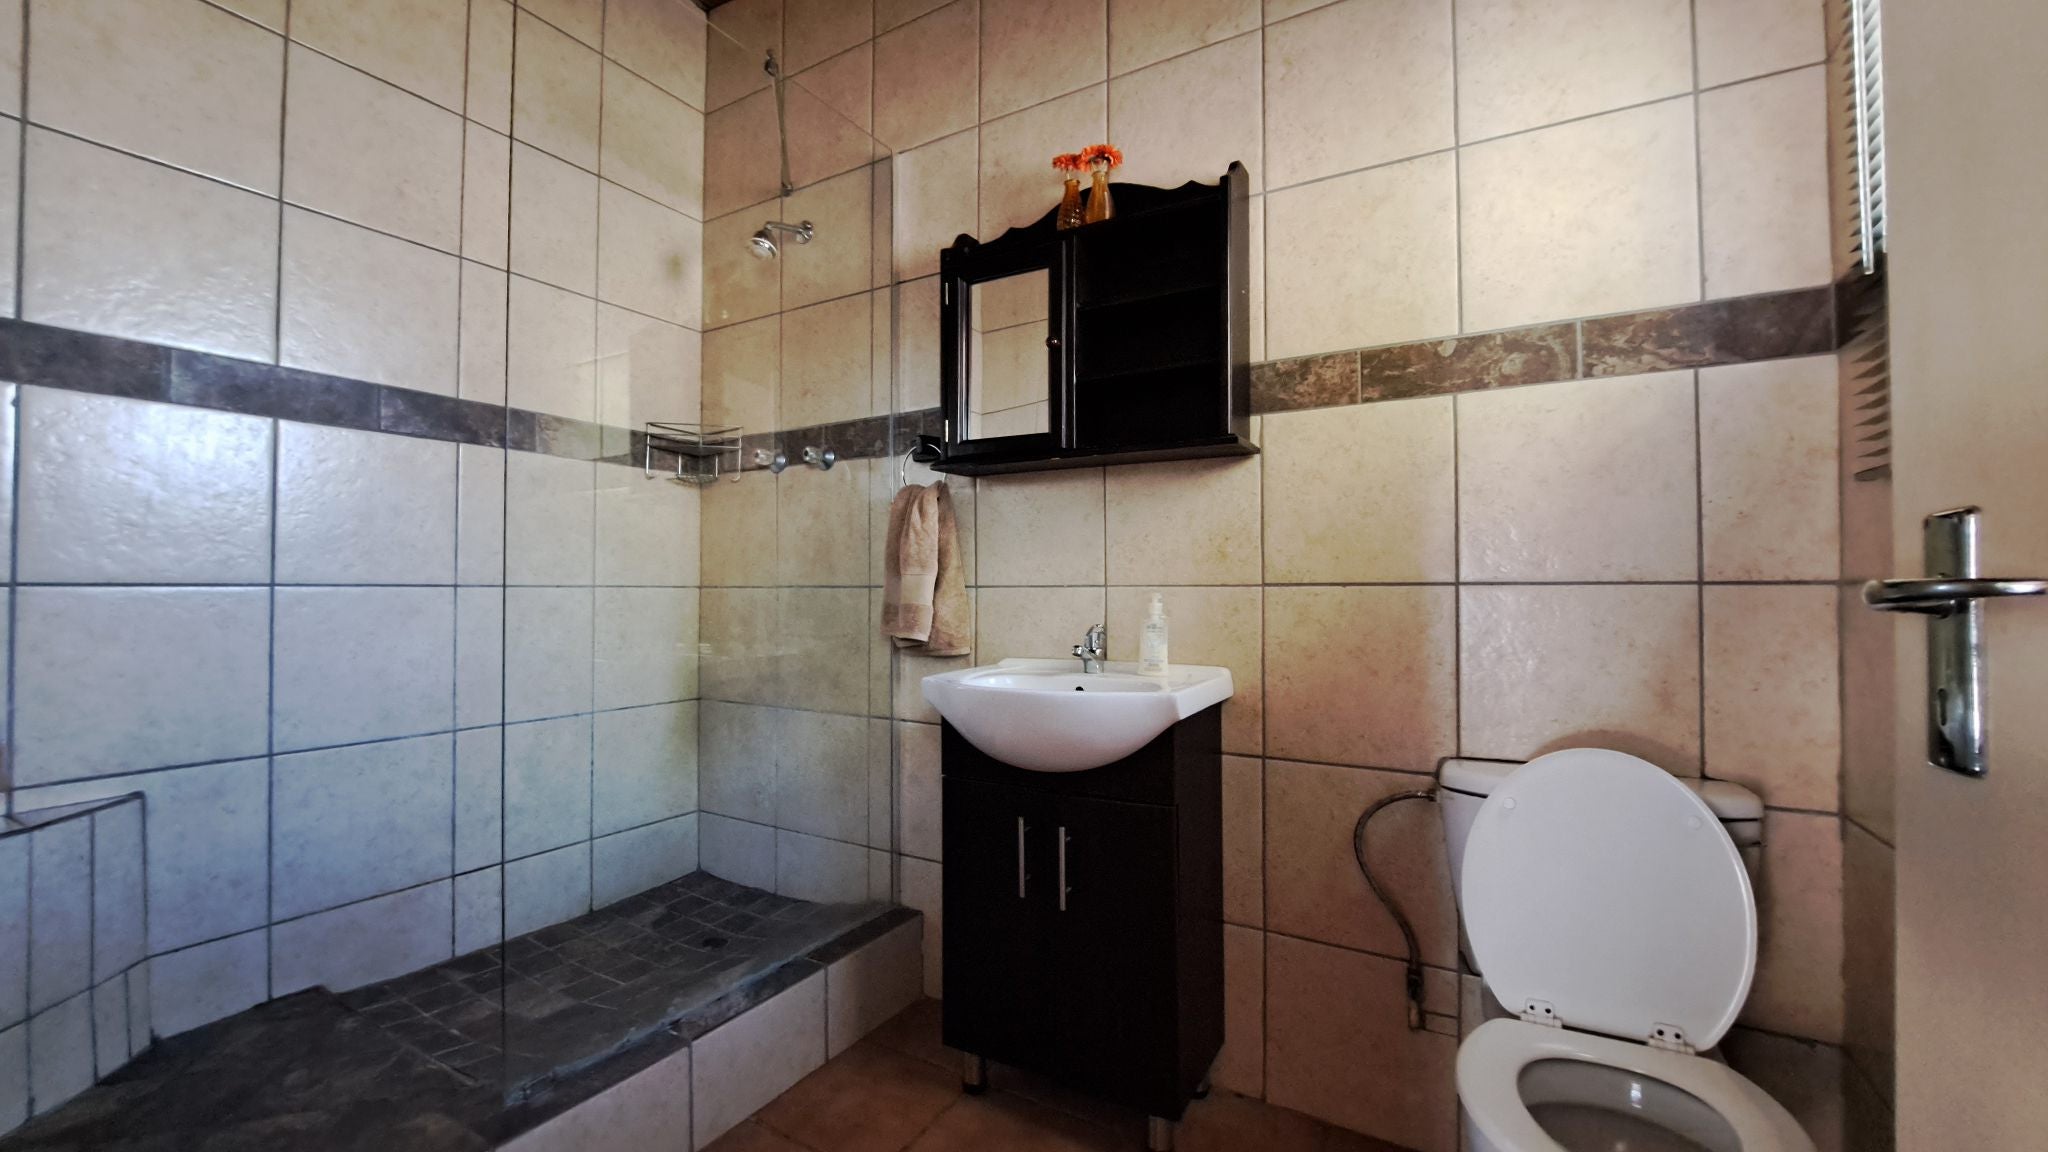 9 On Feijoa Nelspruit Mpumalanga South Africa Bathroom